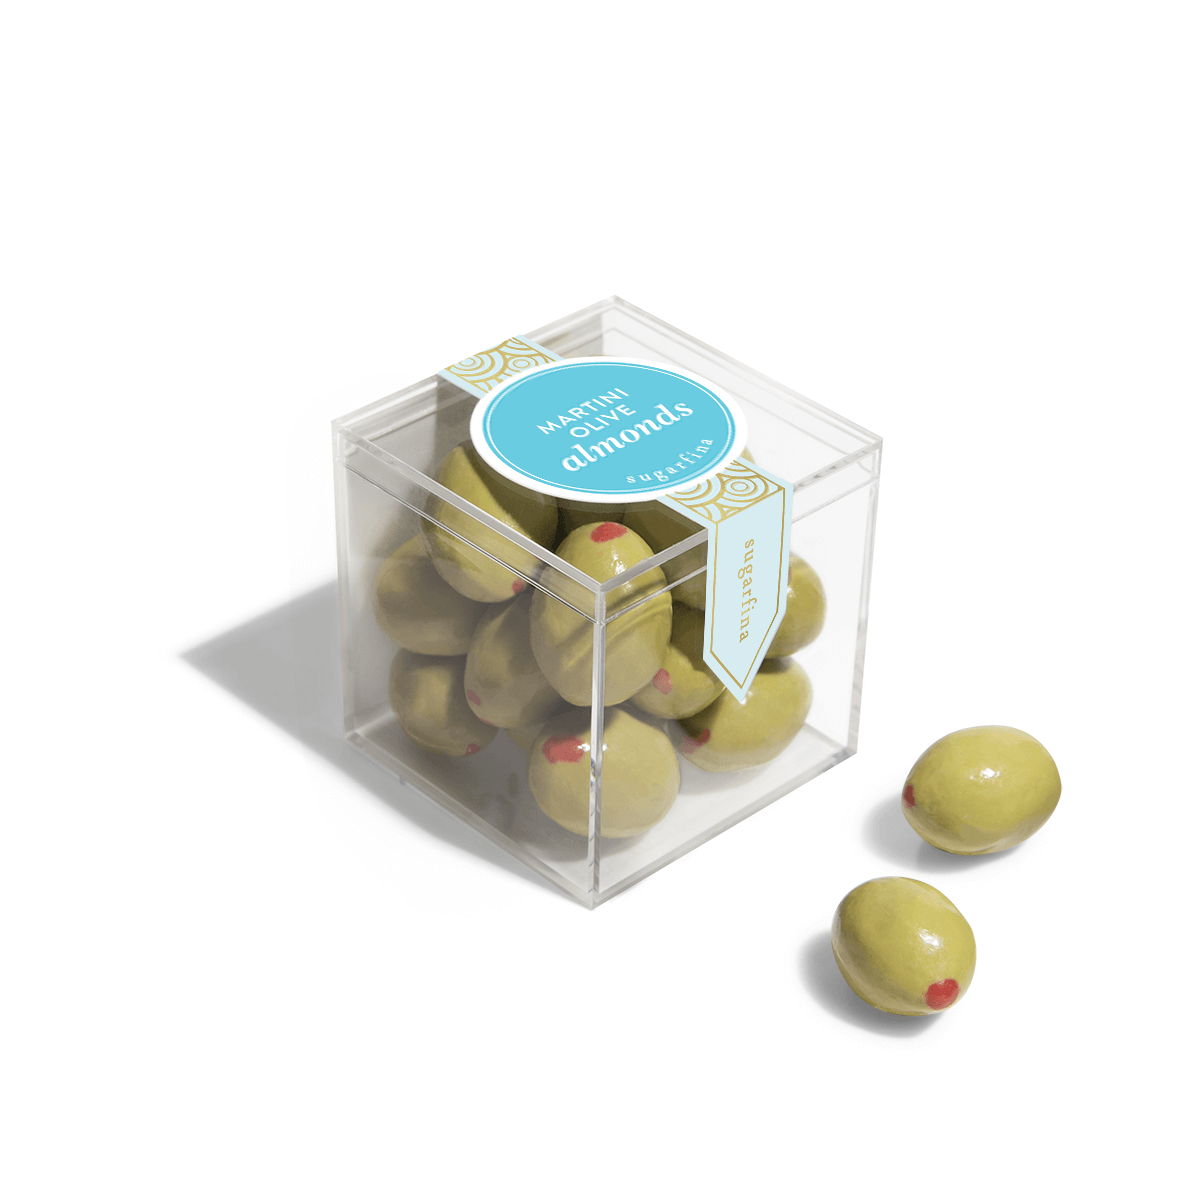 Martini Olive Almonds by Sugarfina